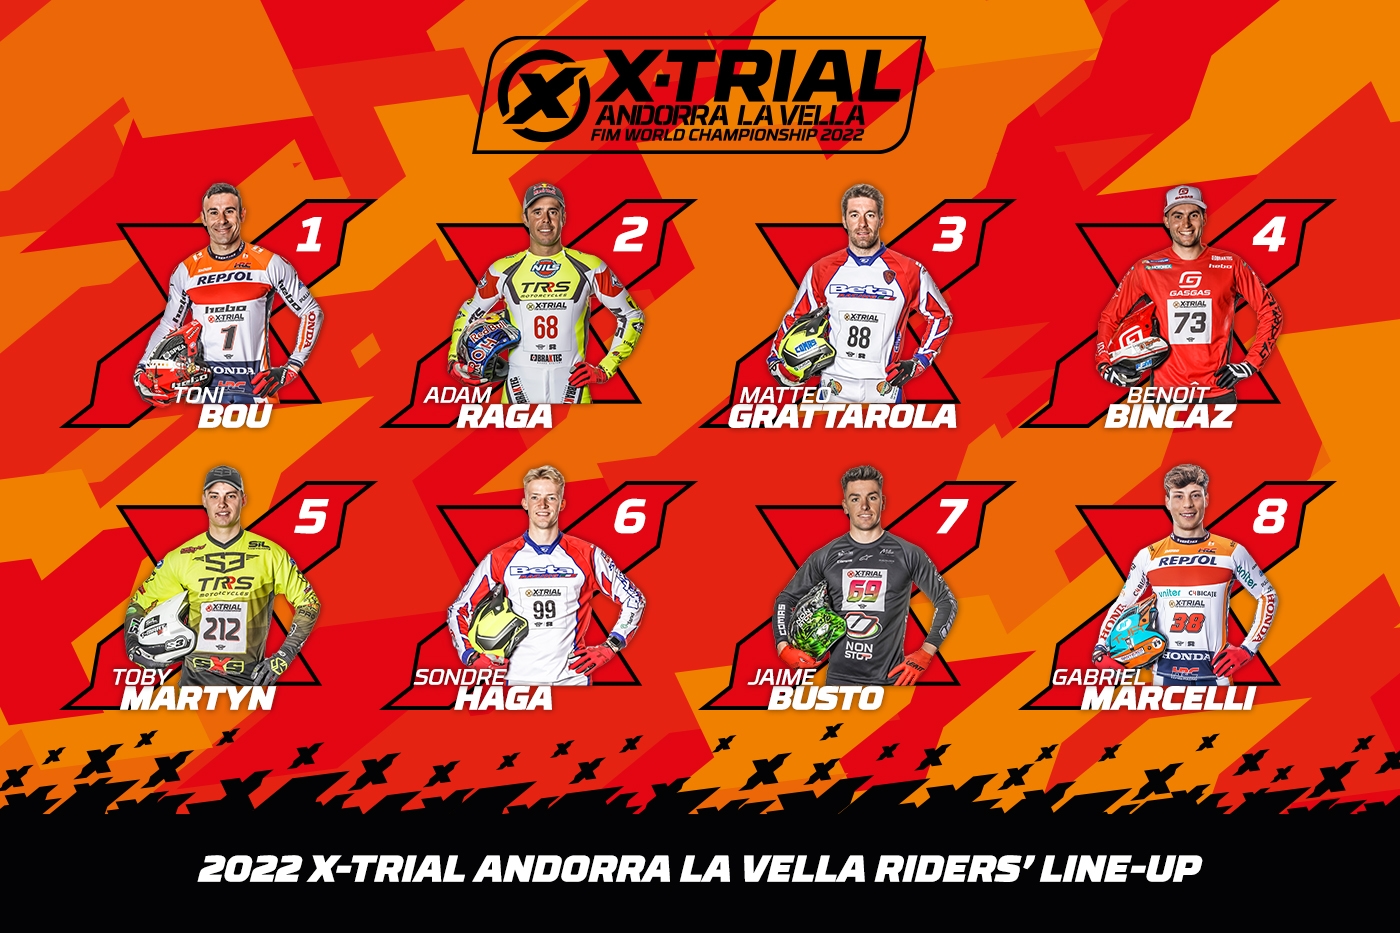 The eight competitors confirmed for X-Trial Andorra la Vella